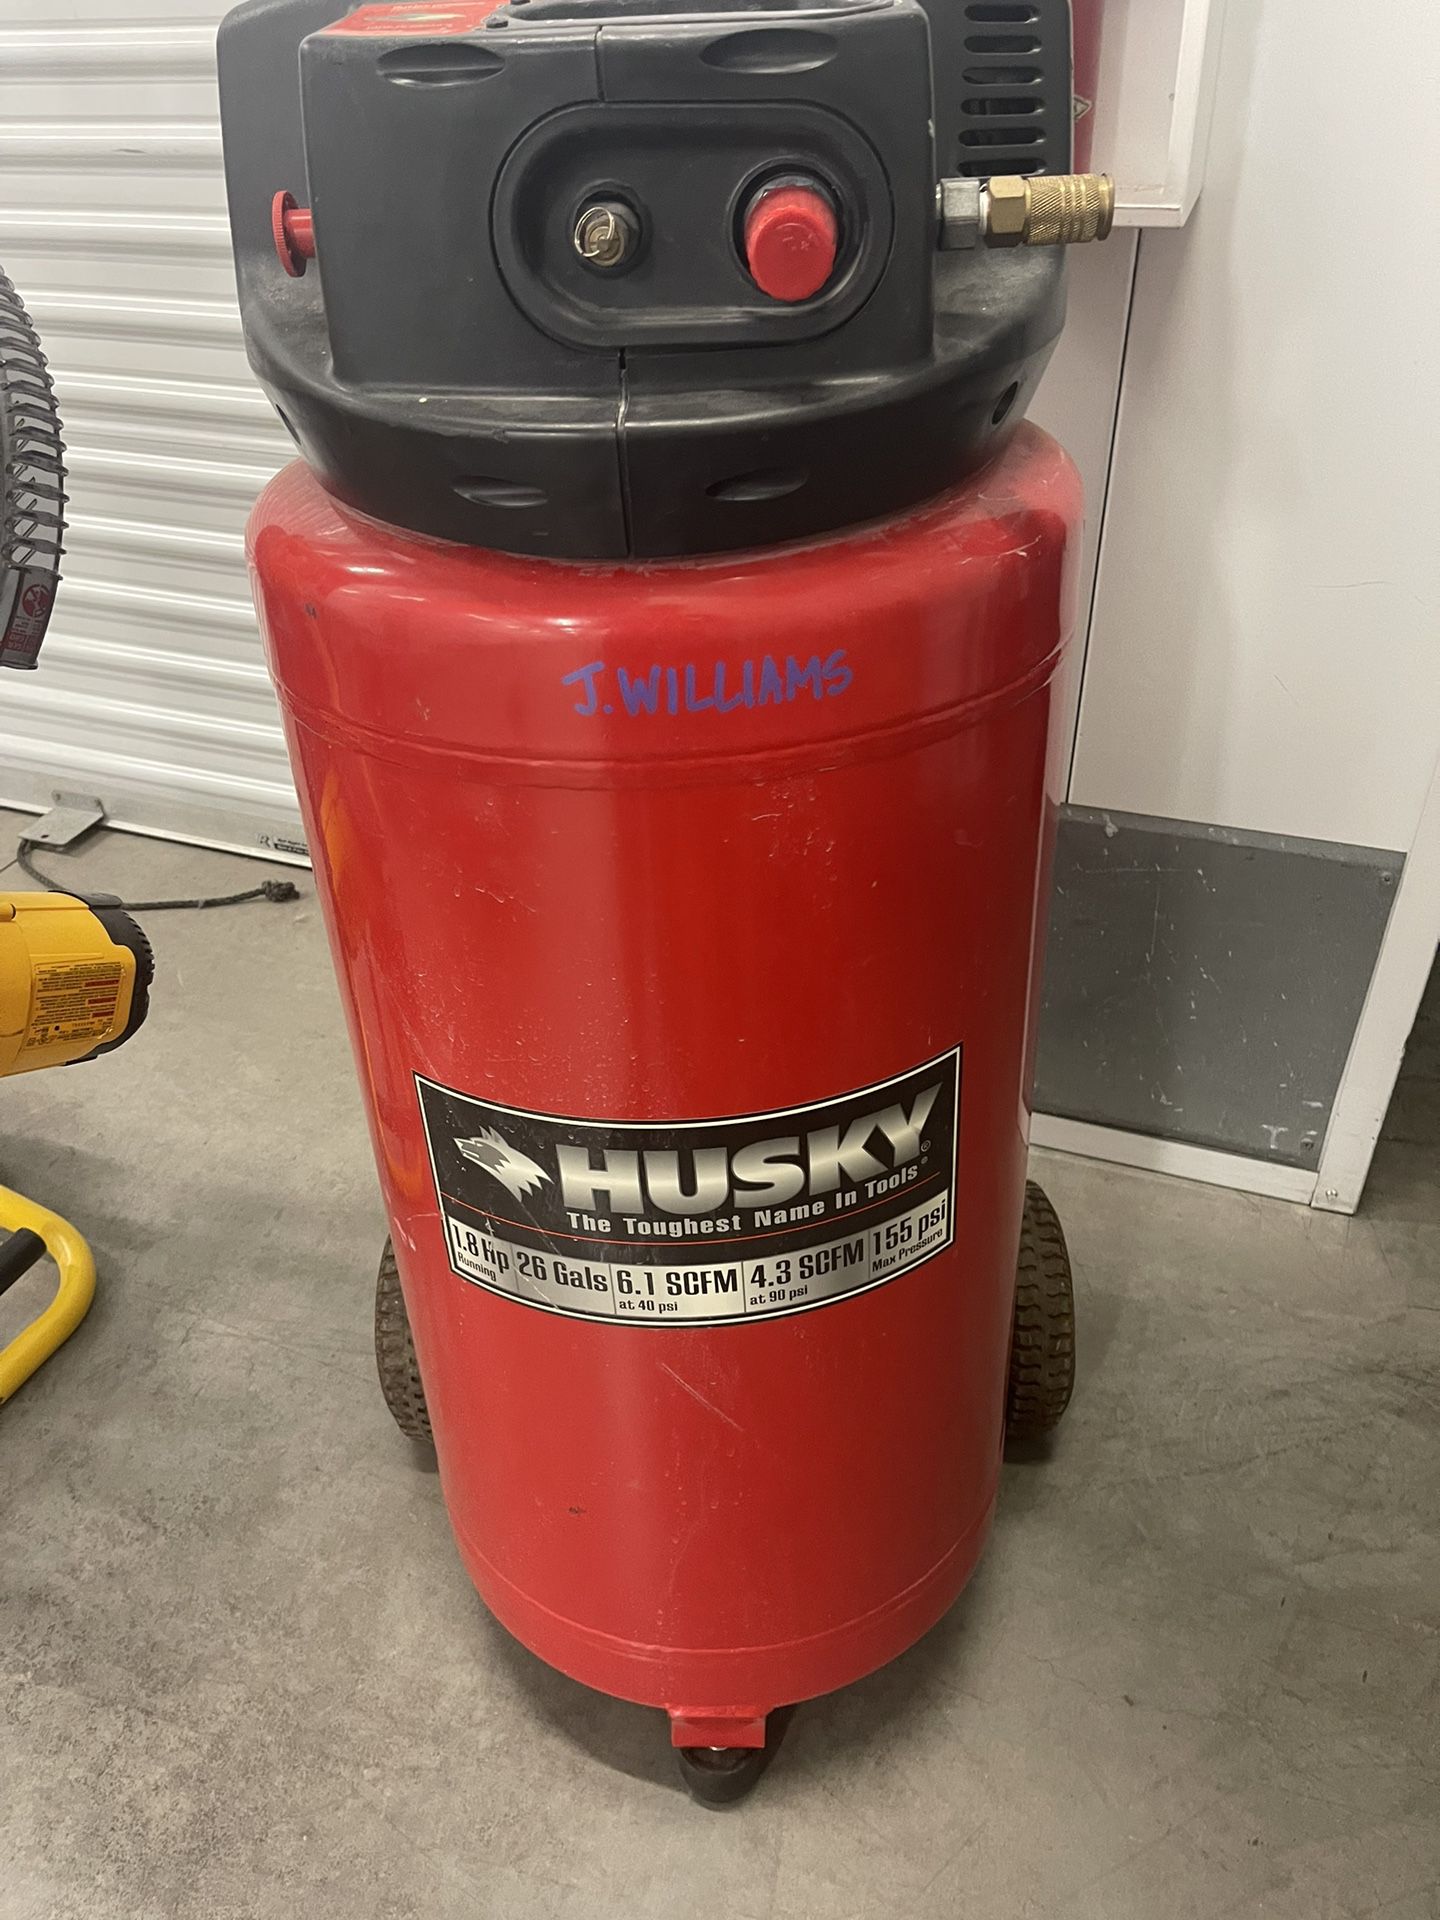 26 Gallon Huskey Air Compressor 